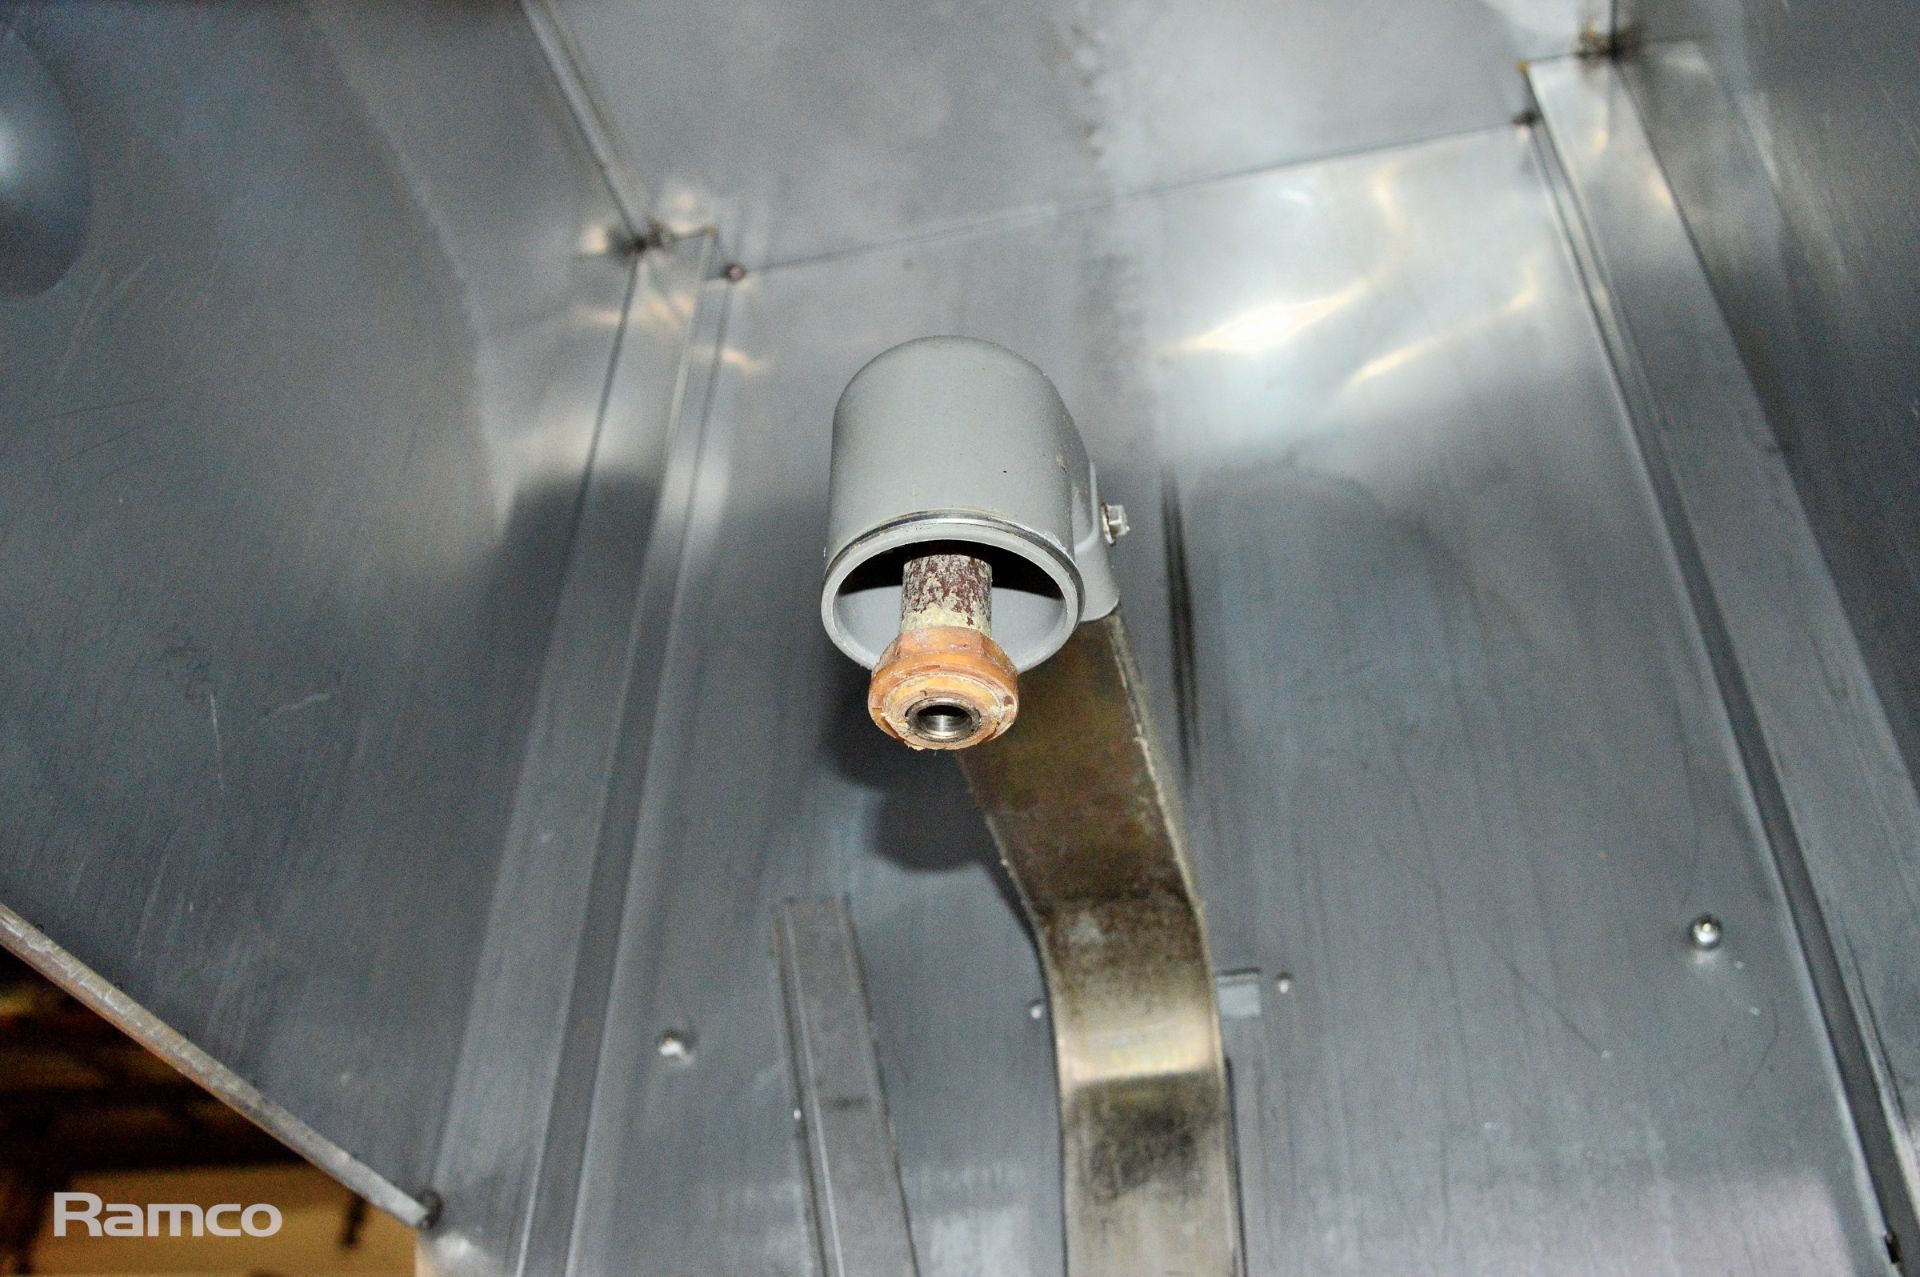 Hobart AMXXRS pass through dishwasher - 77x72x152cm - Image 4 of 5